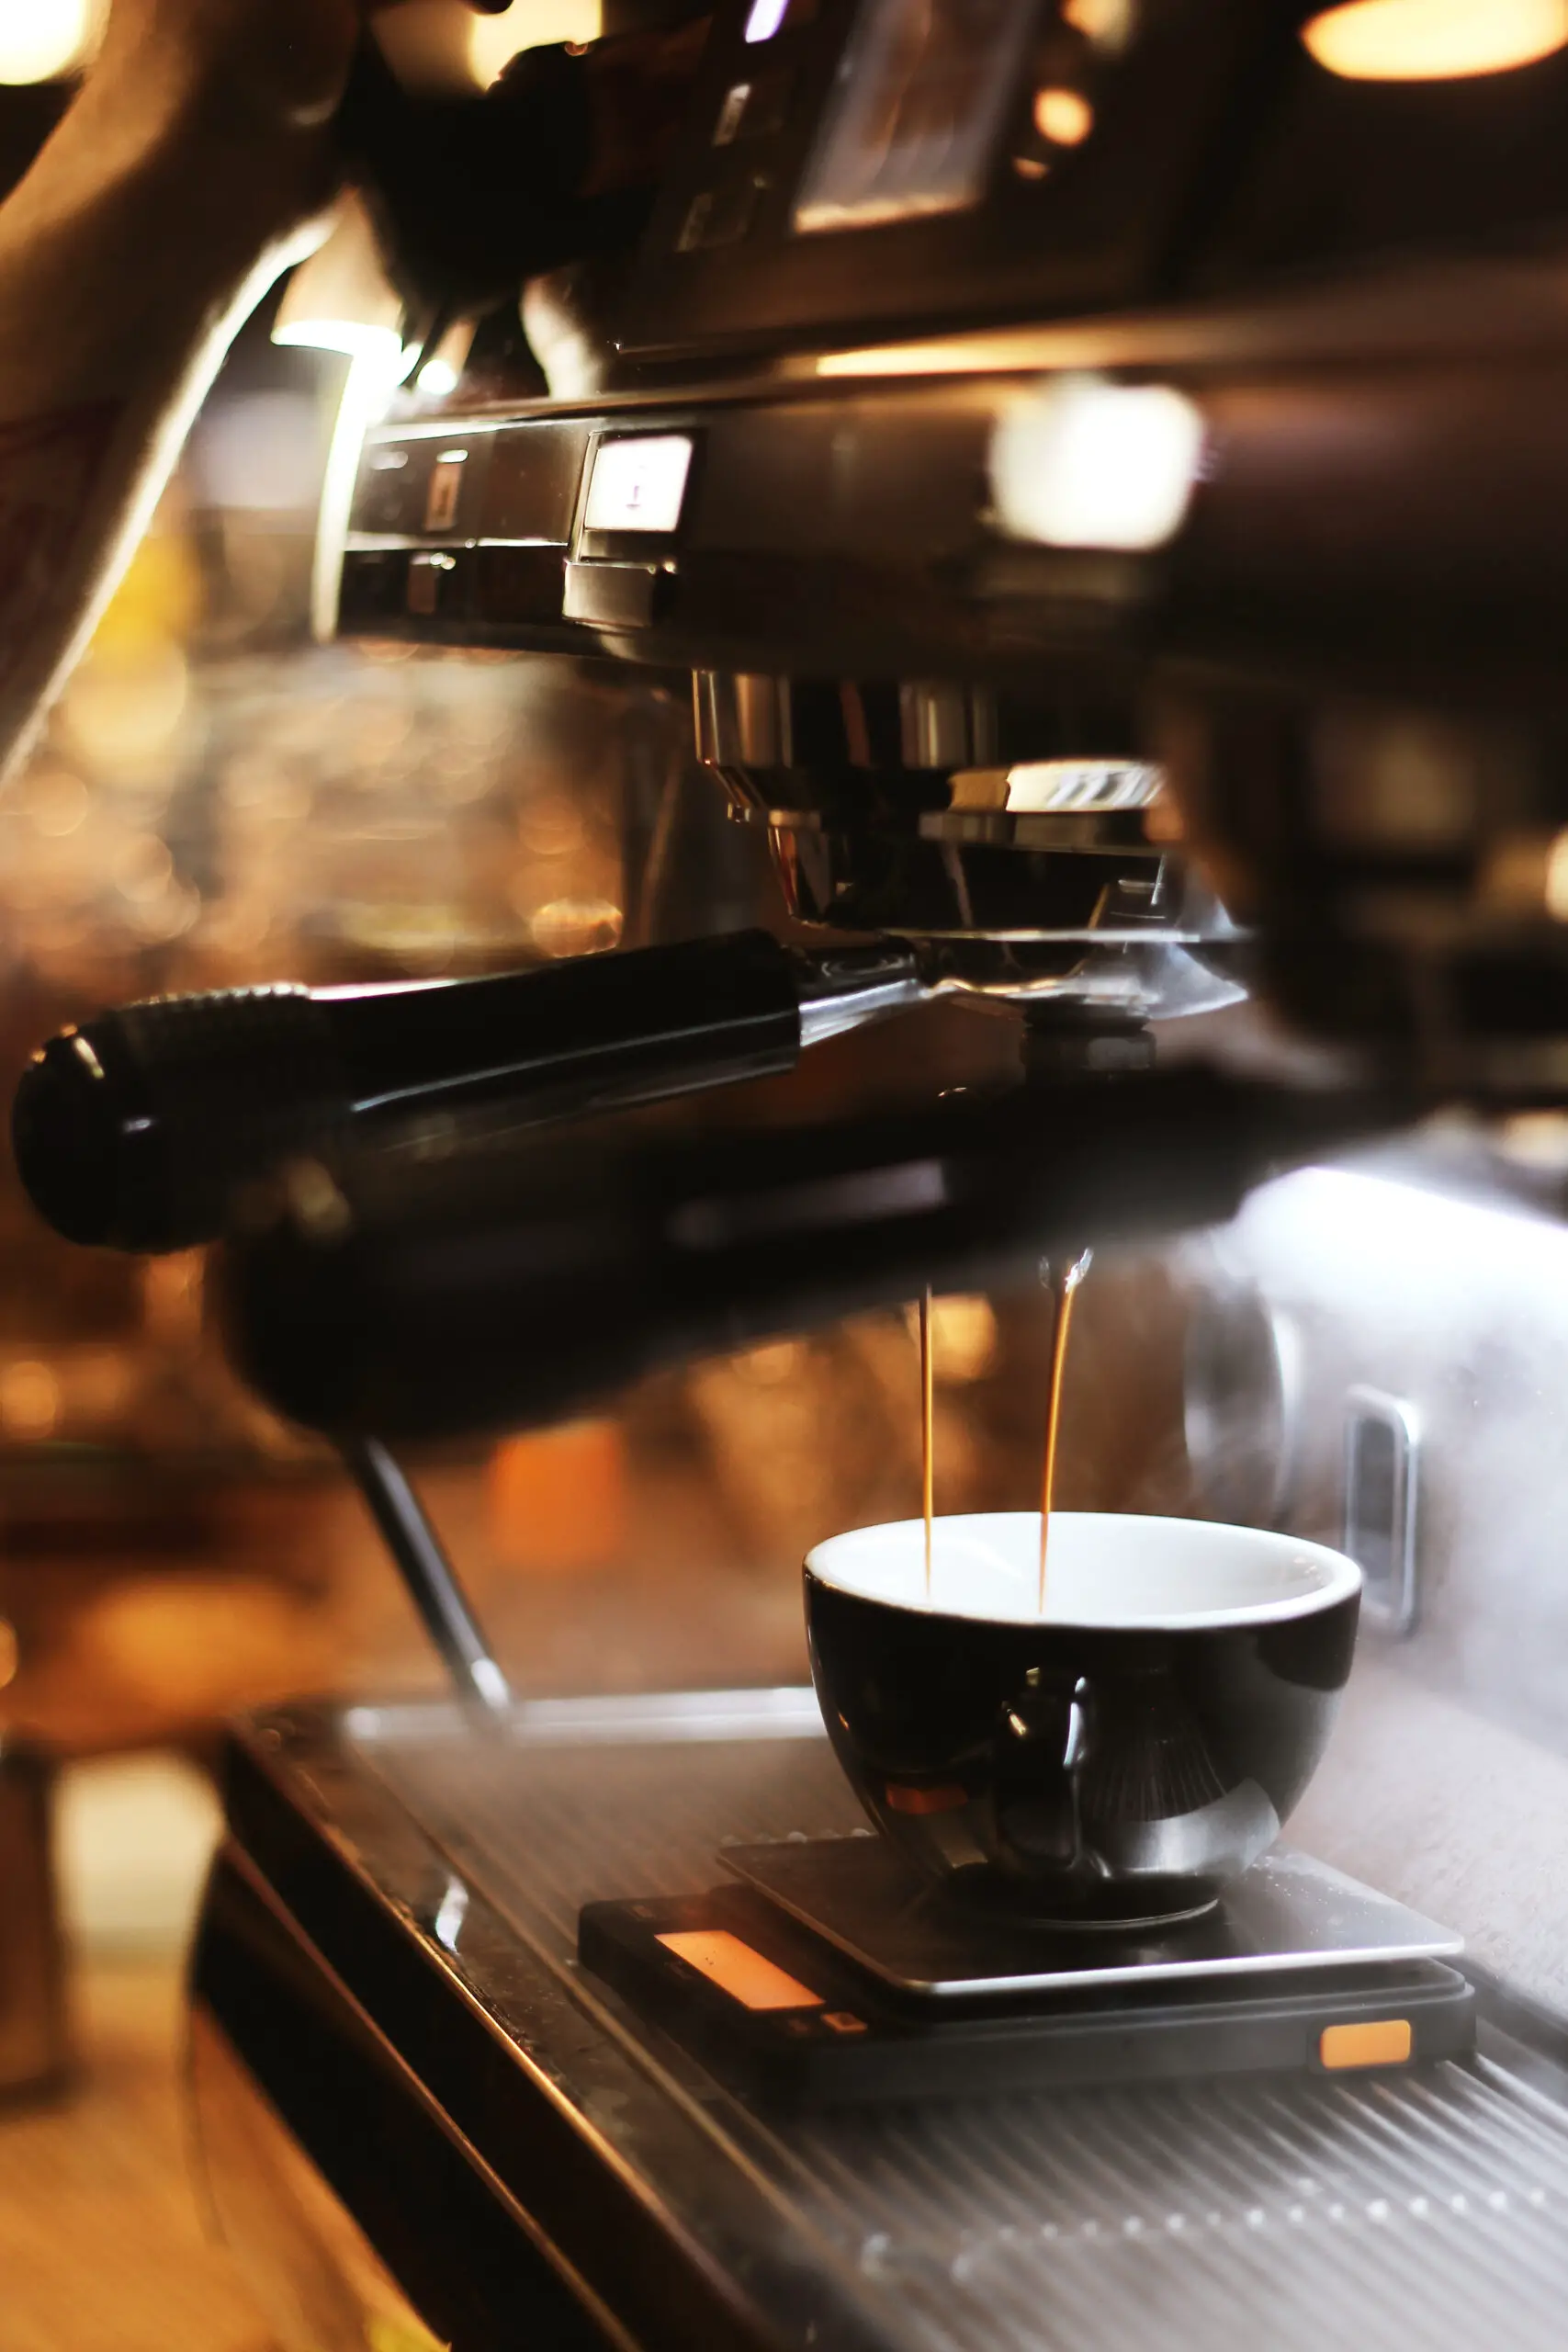 Black espresso maker with cup